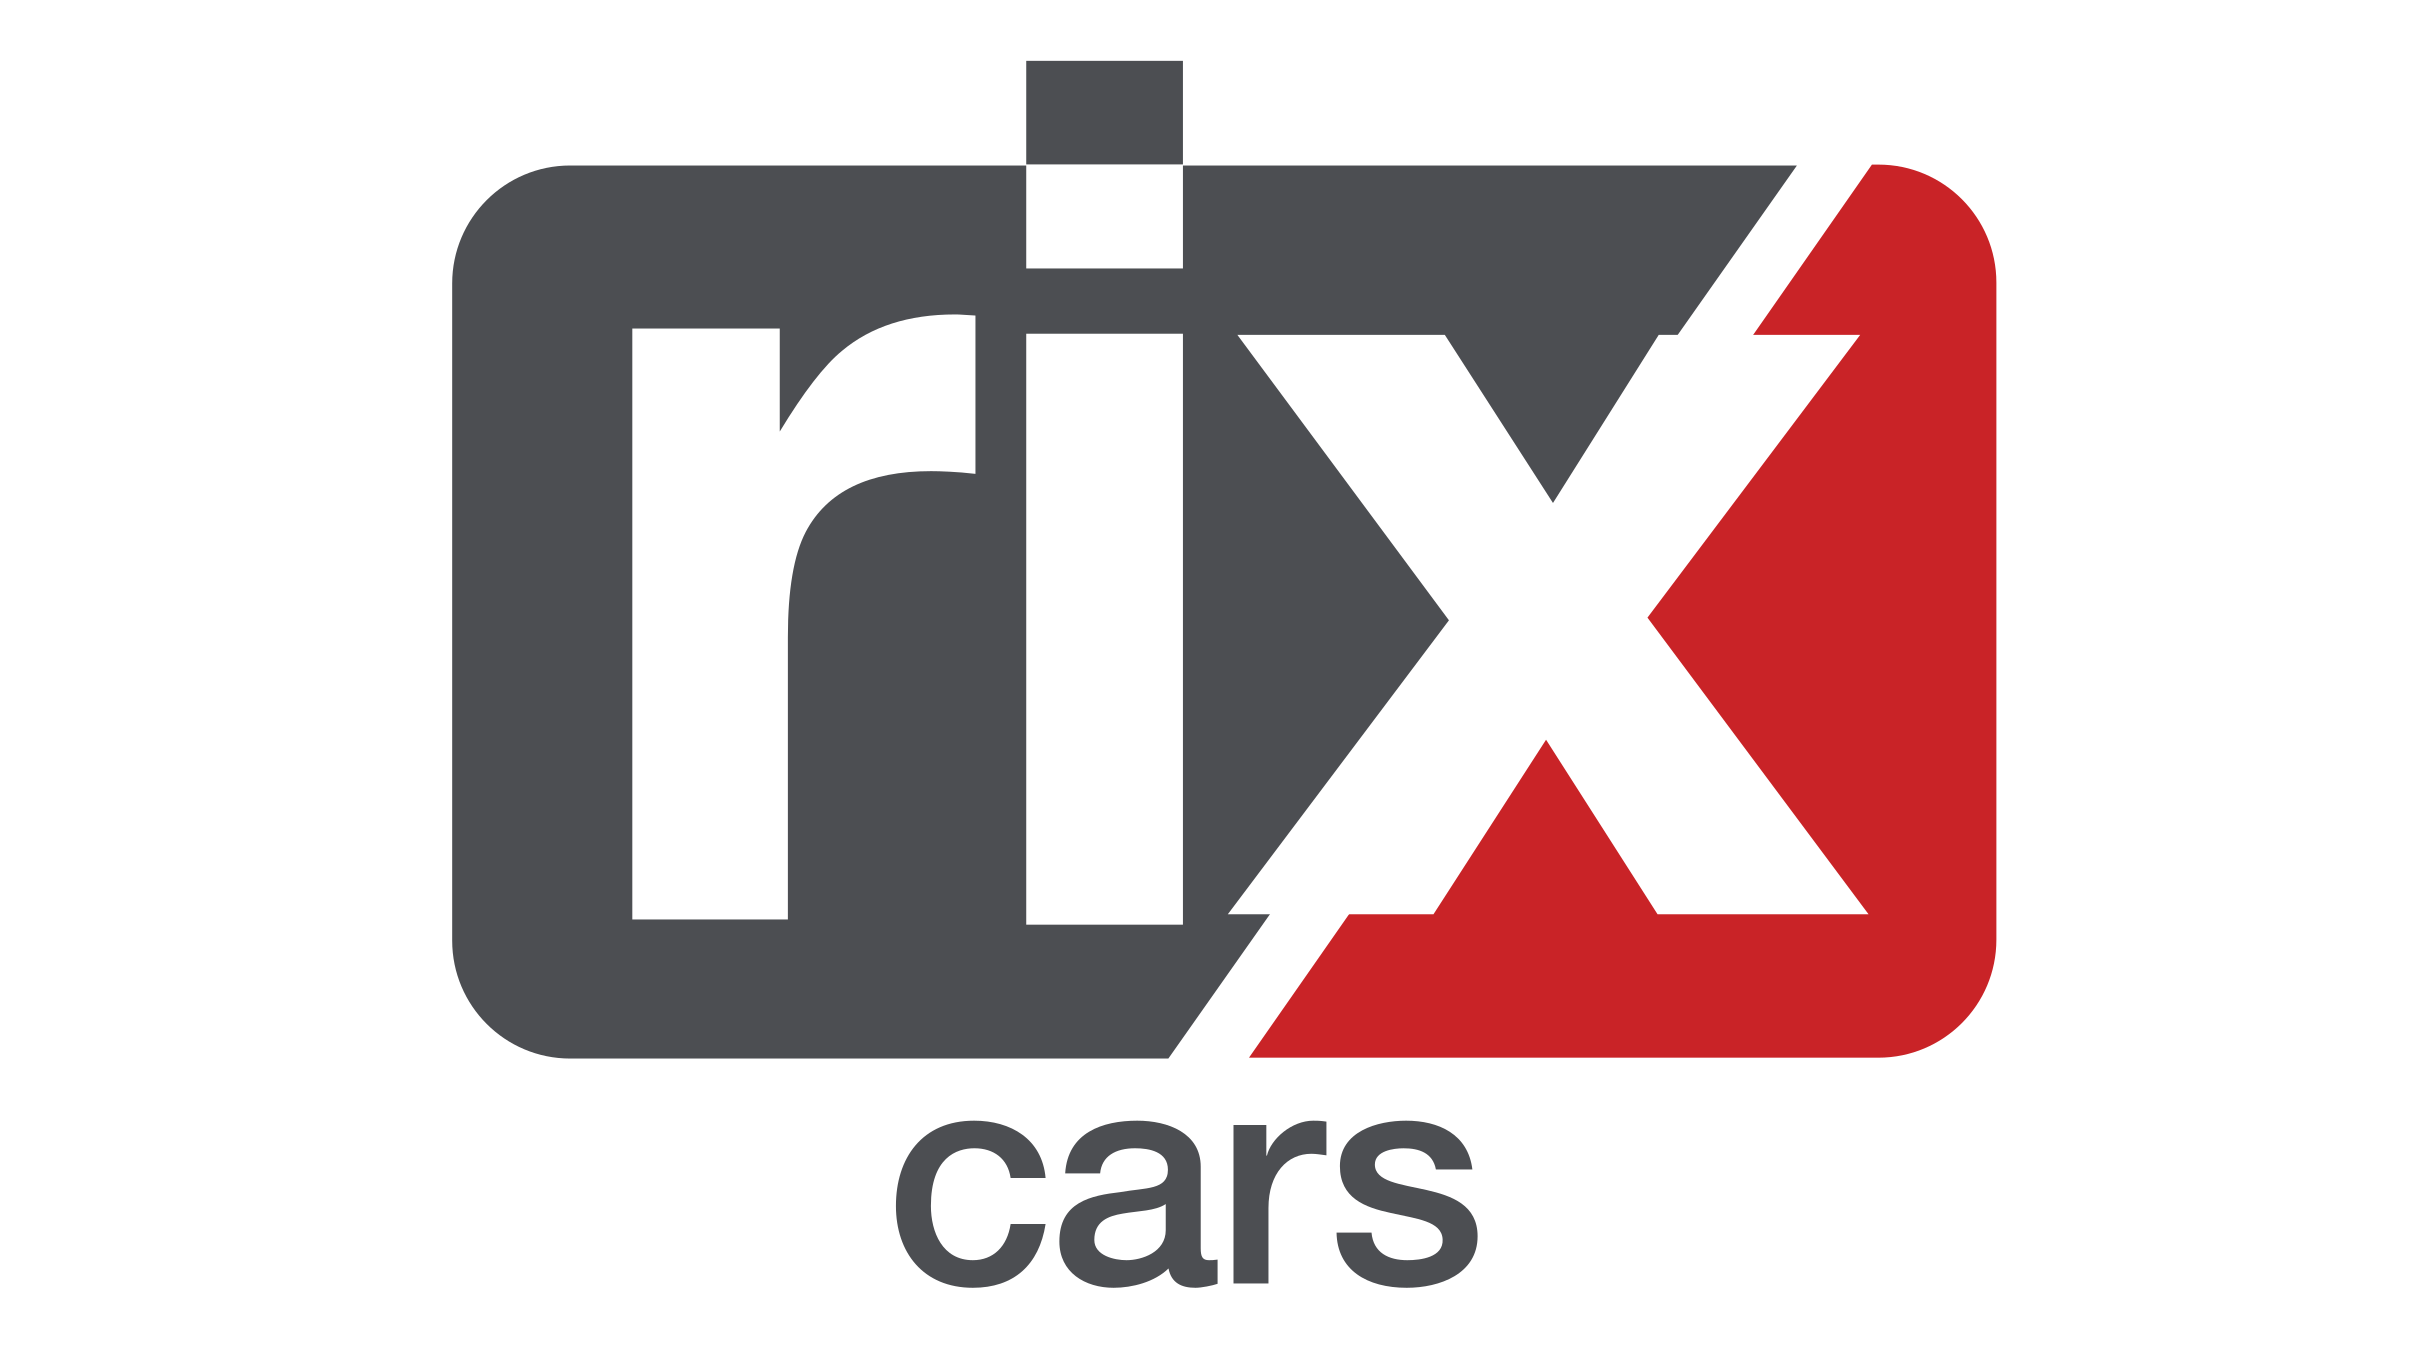 Rix Cars (Screen)